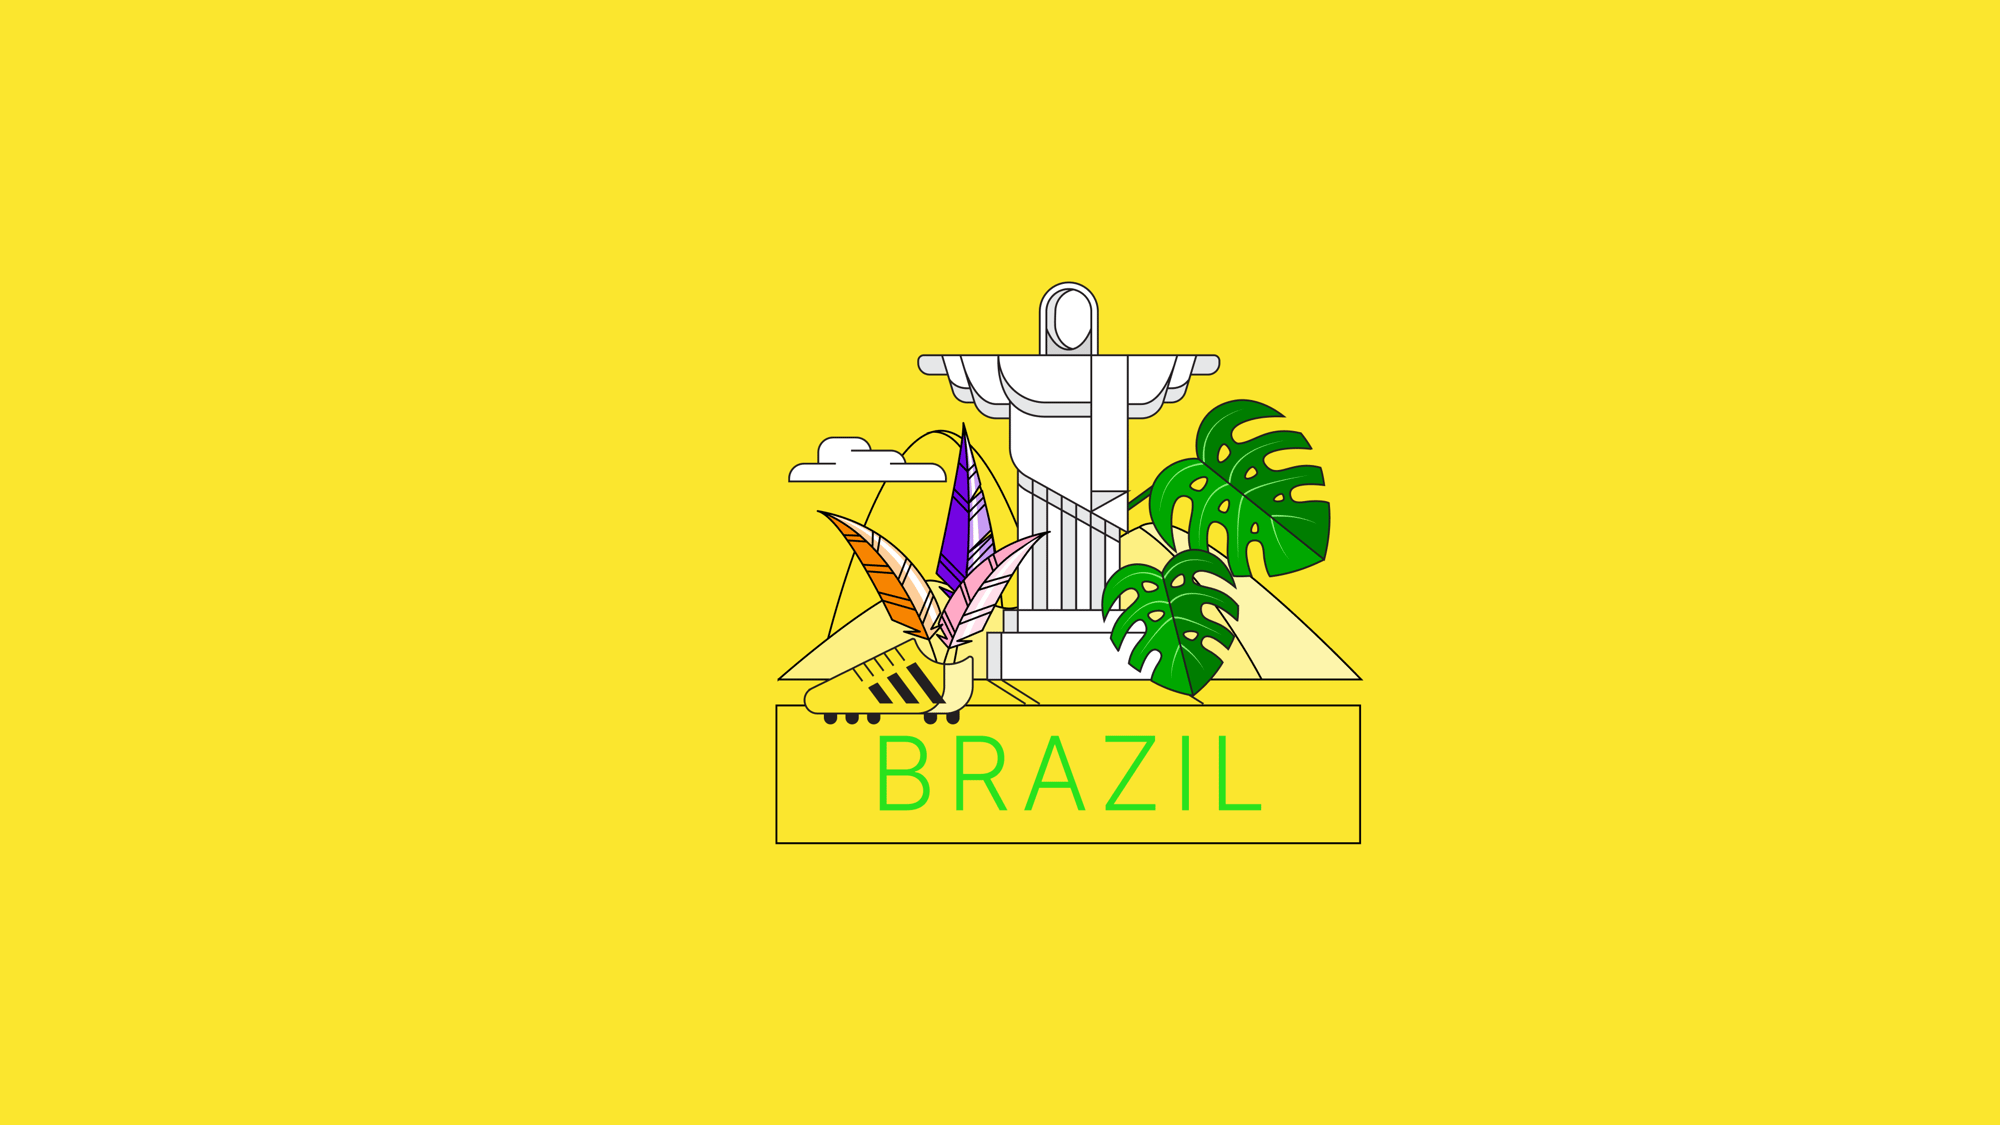 Moving to Brazil header